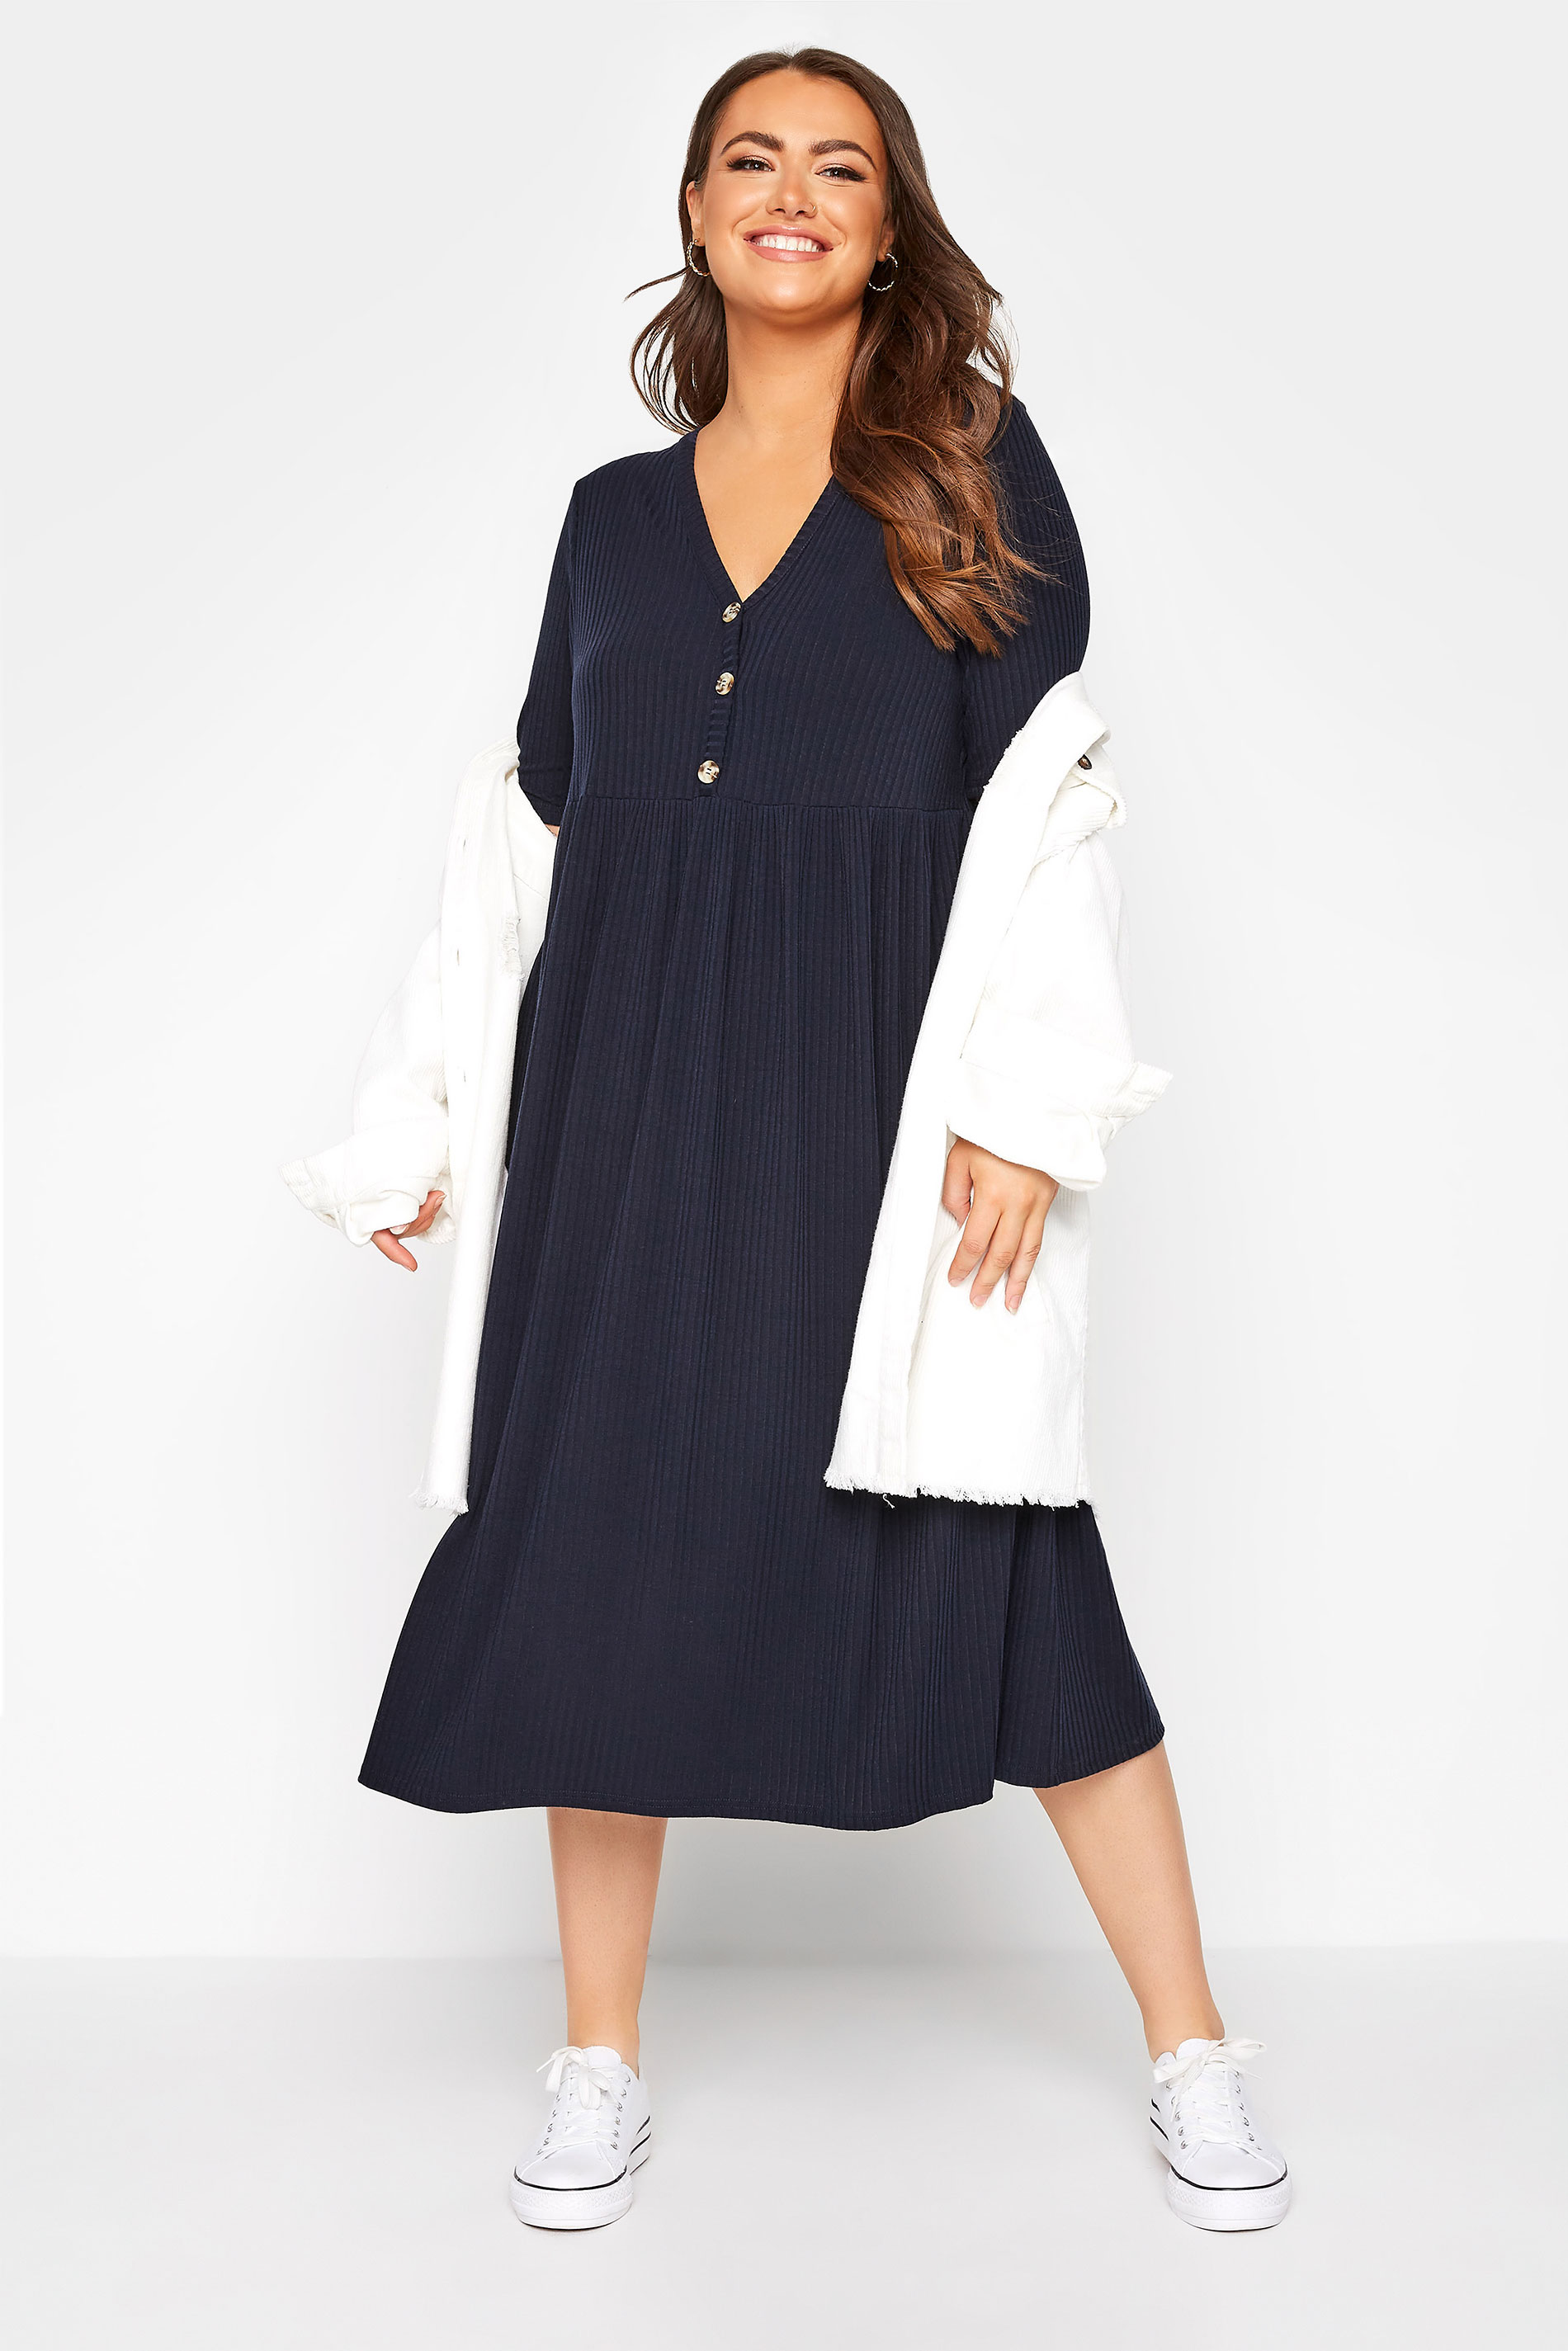 Robes Grande Taille Grande taille  Robes Mi-Longue | LIMITED COLLECTION - Robe Midi Bleue Marine Nervuré Peplum - EX26888